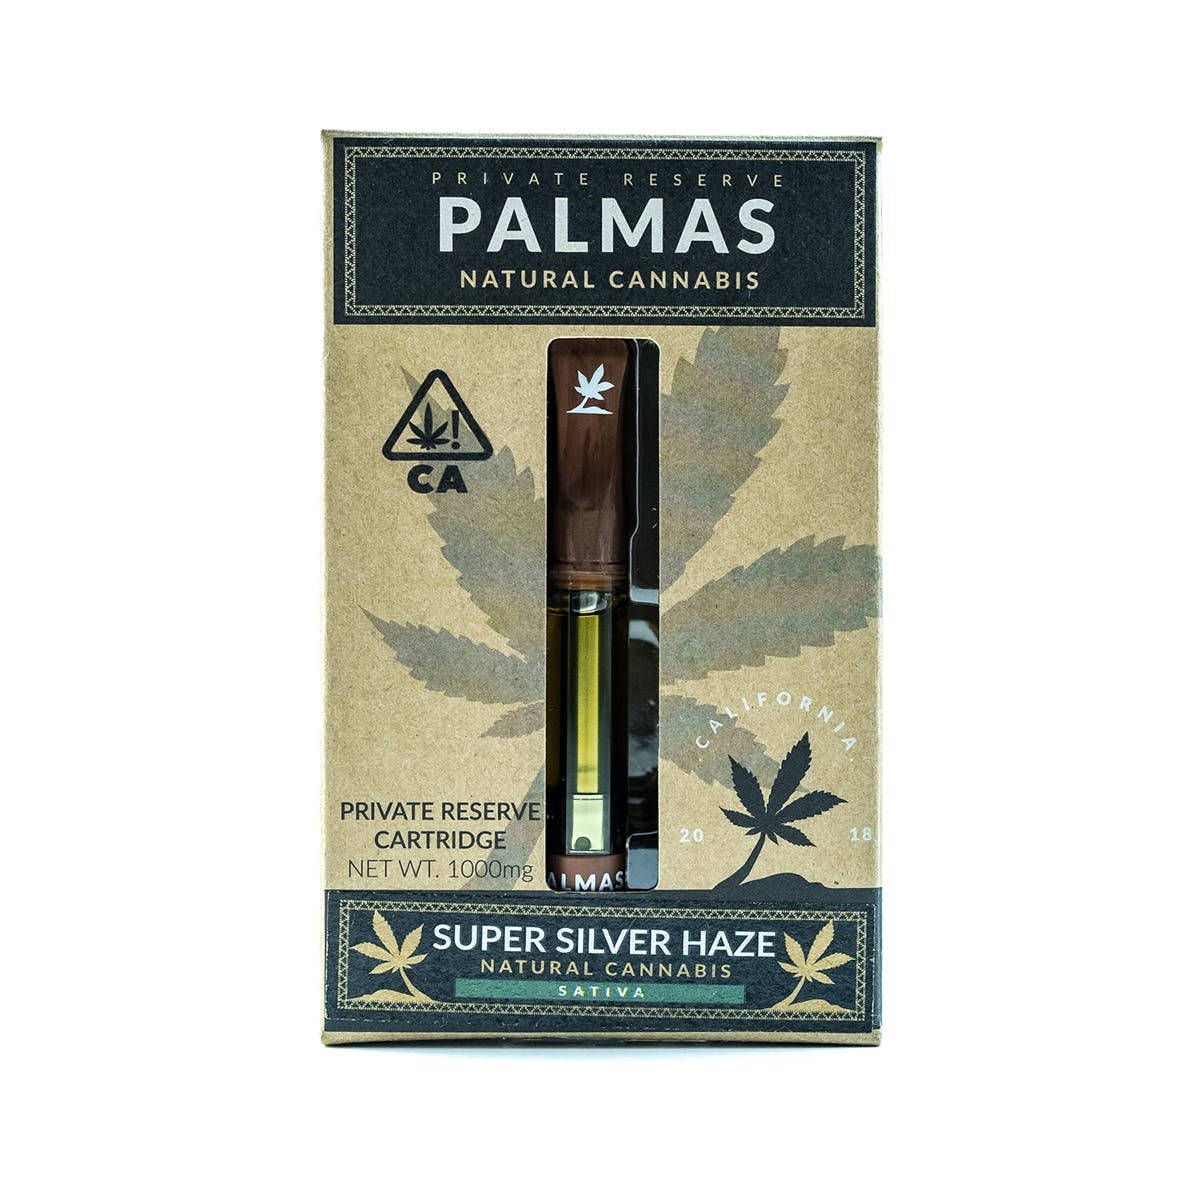 Palmas Private Reserve Cartridge-Super Silver Haze